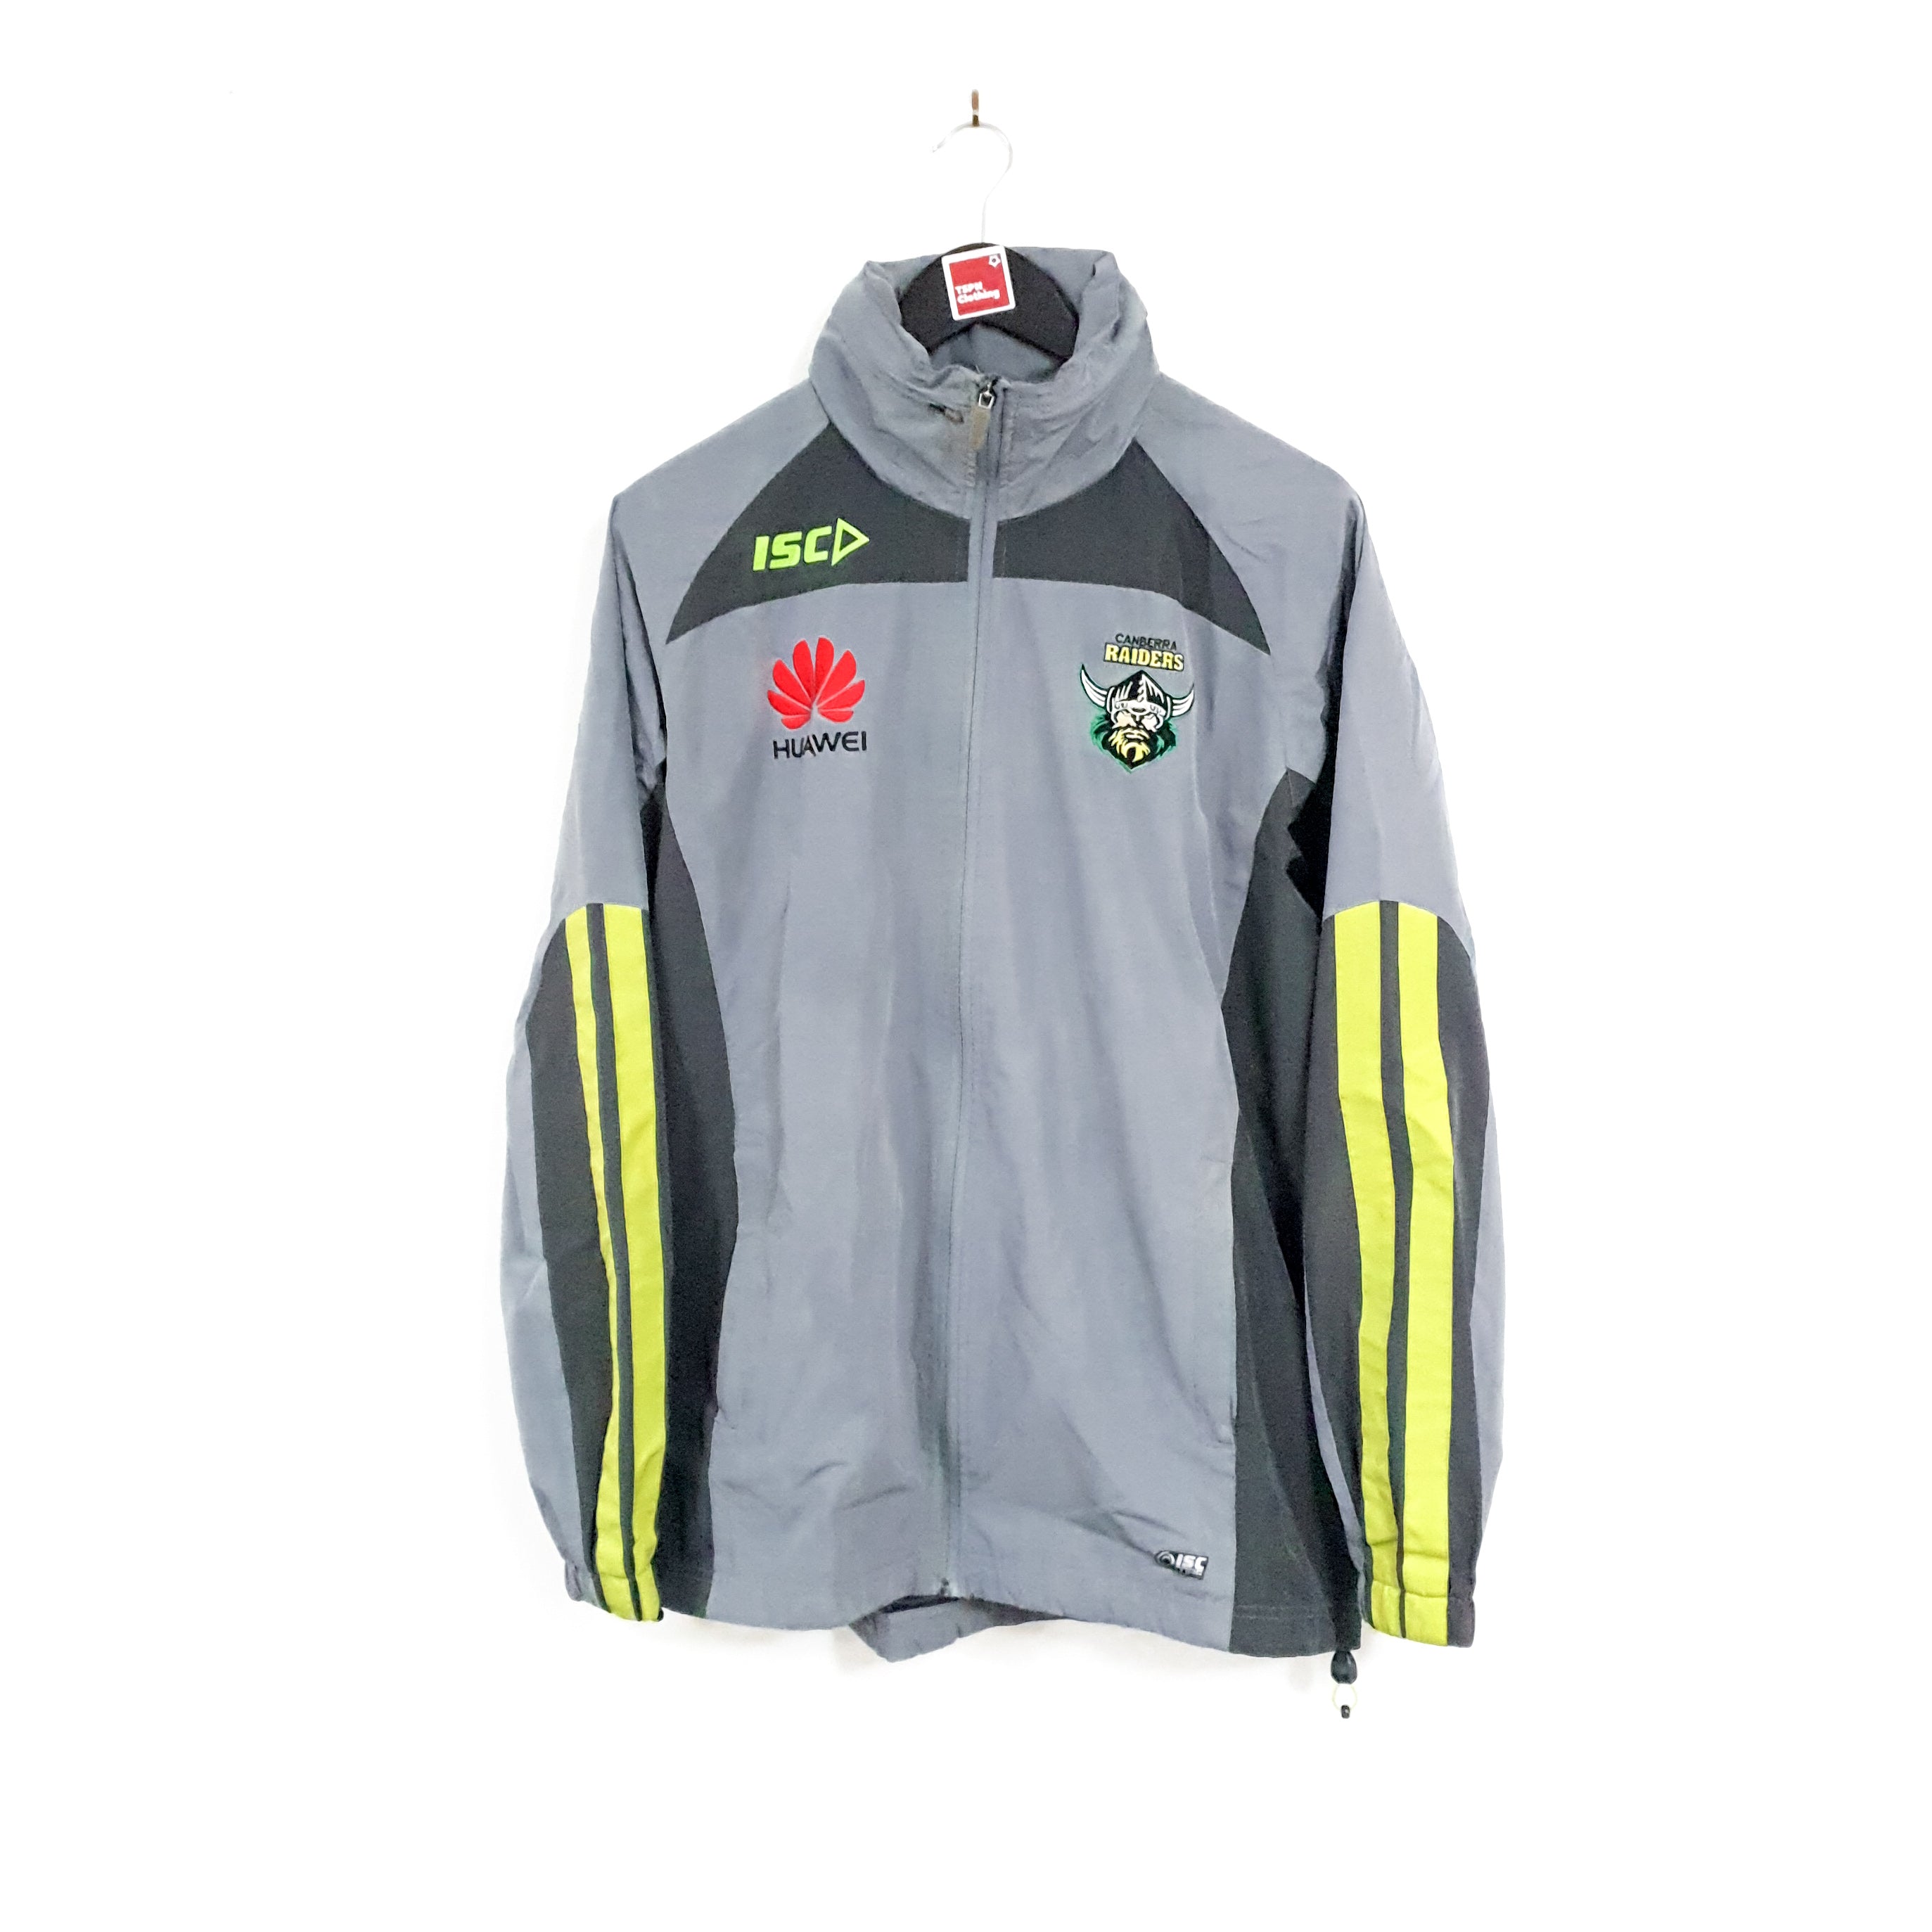 TSPN Calcio - Canberra Raiders sideline jacket 2016/17